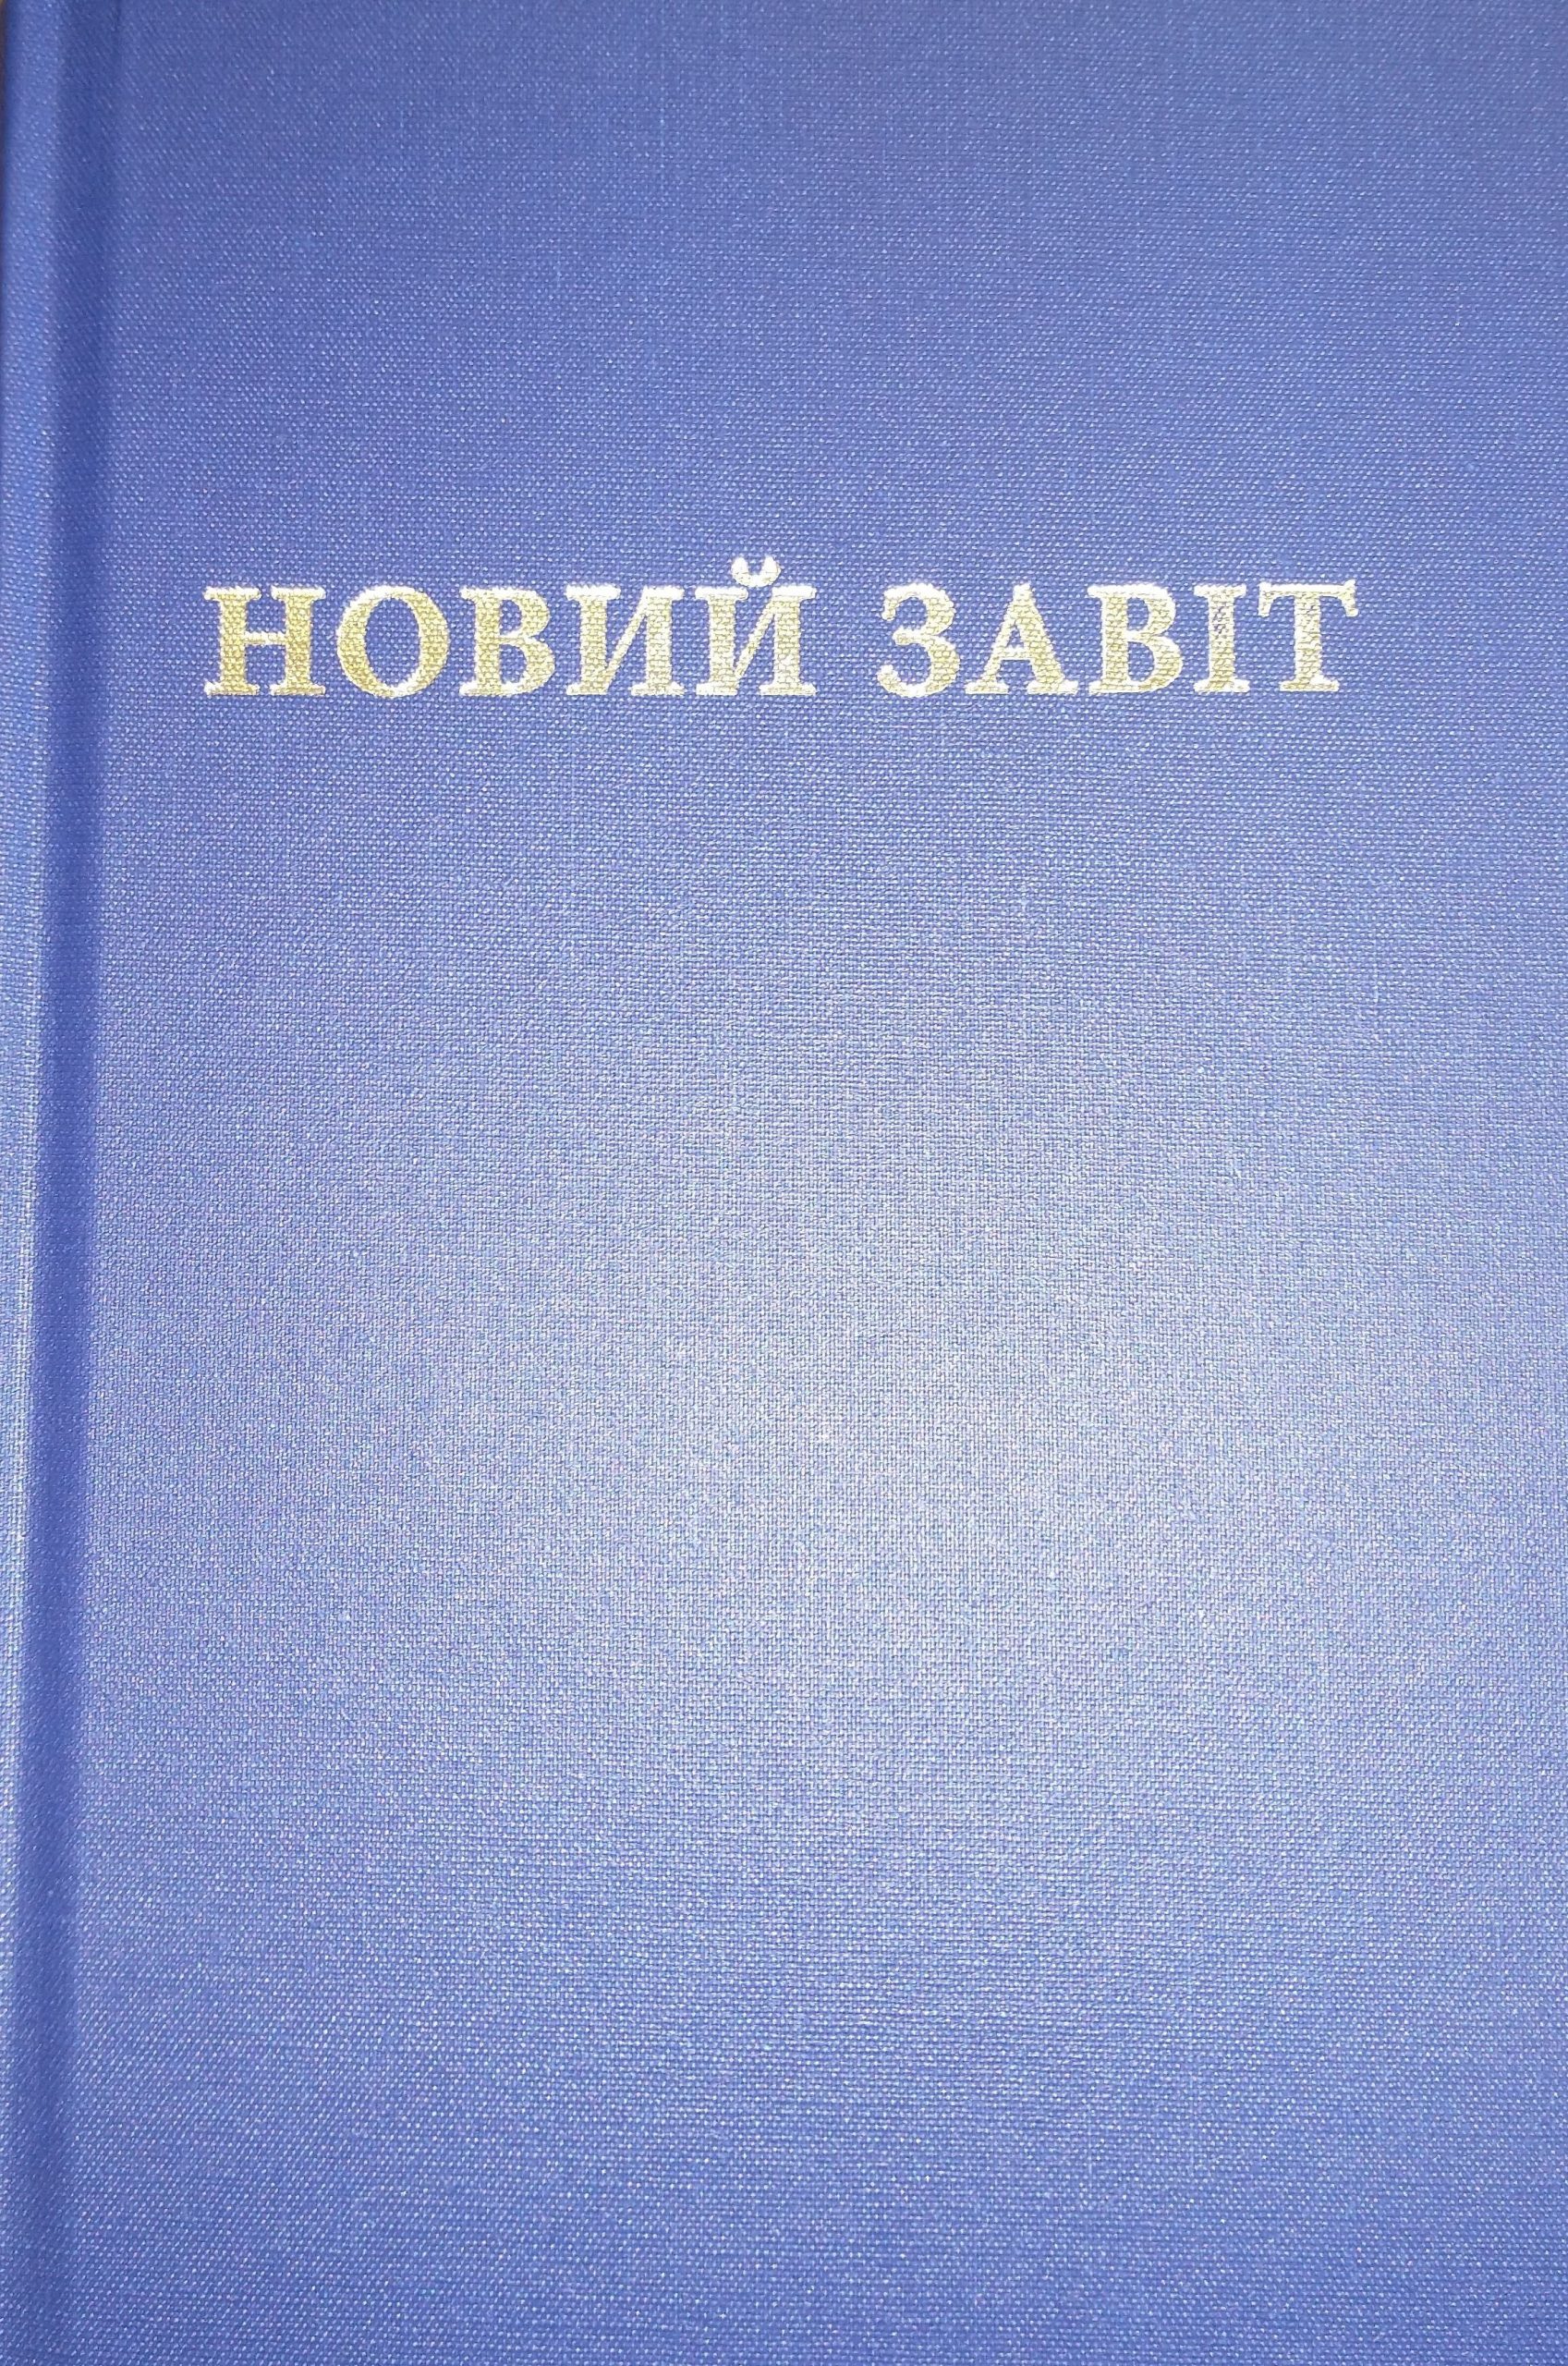 New Testament Ukrainian BLUE hardback